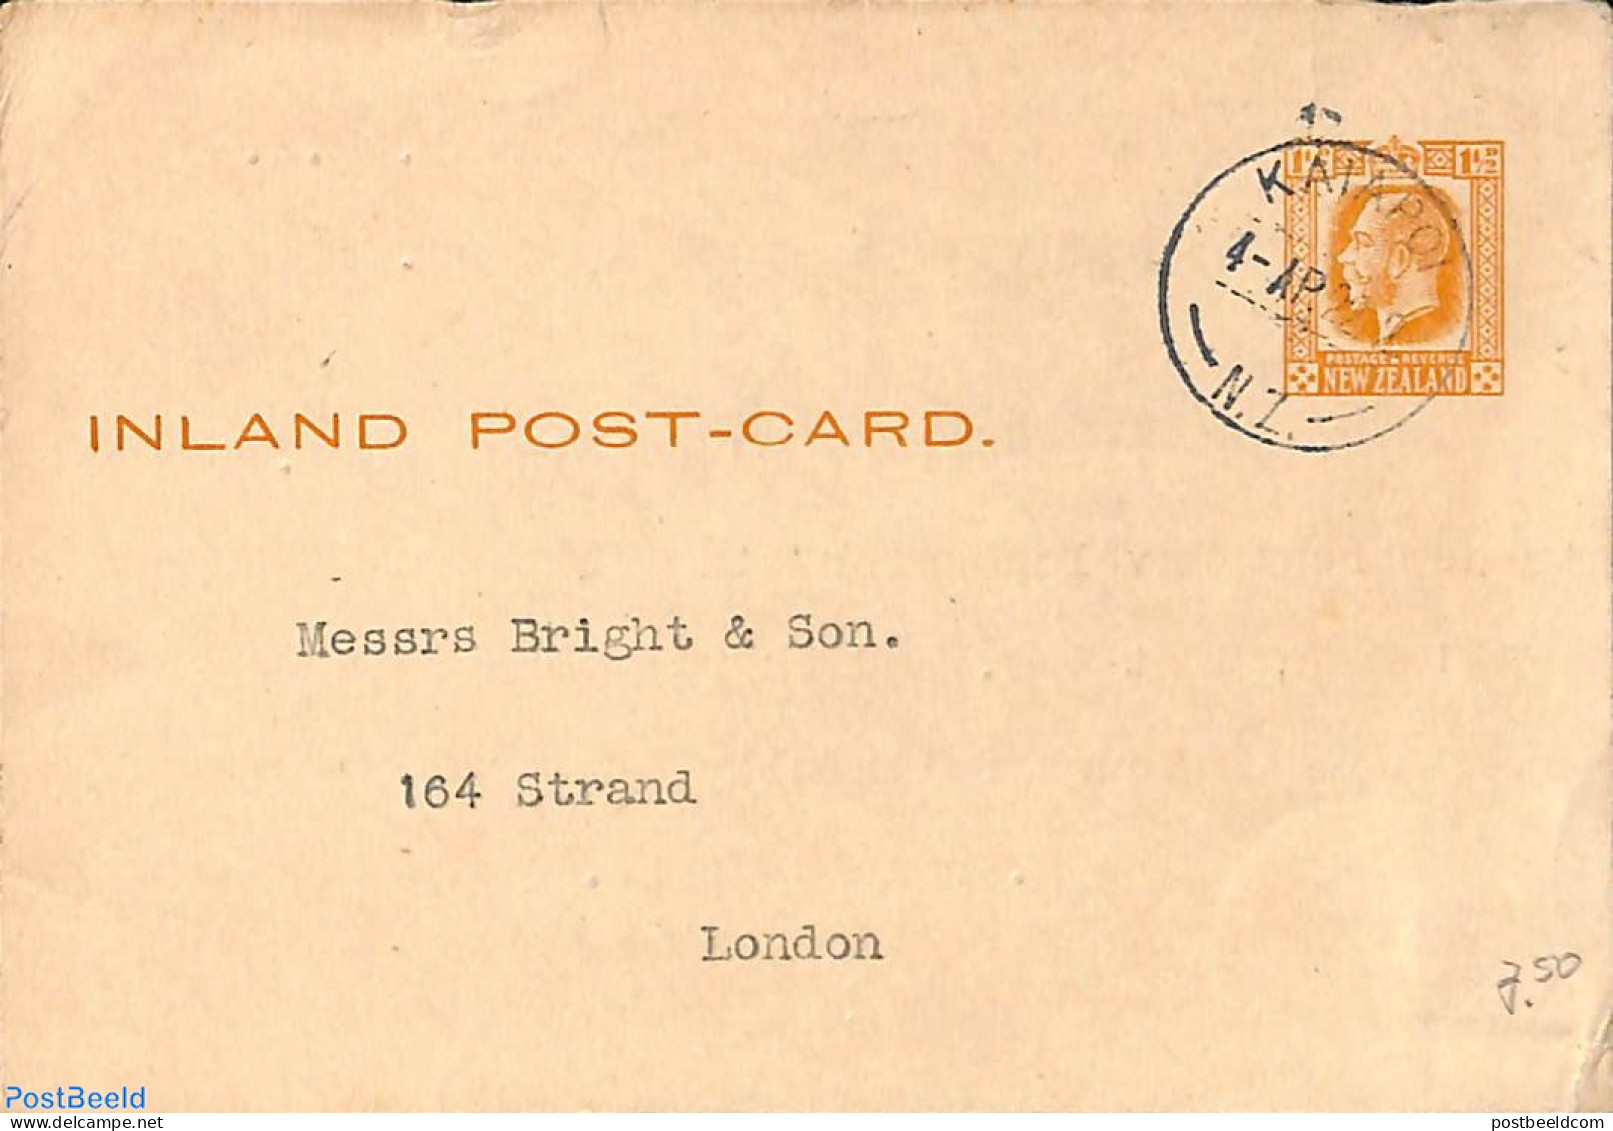 New Zealand 1922 Postcard To London, Used Postal Stationary - Storia Postale